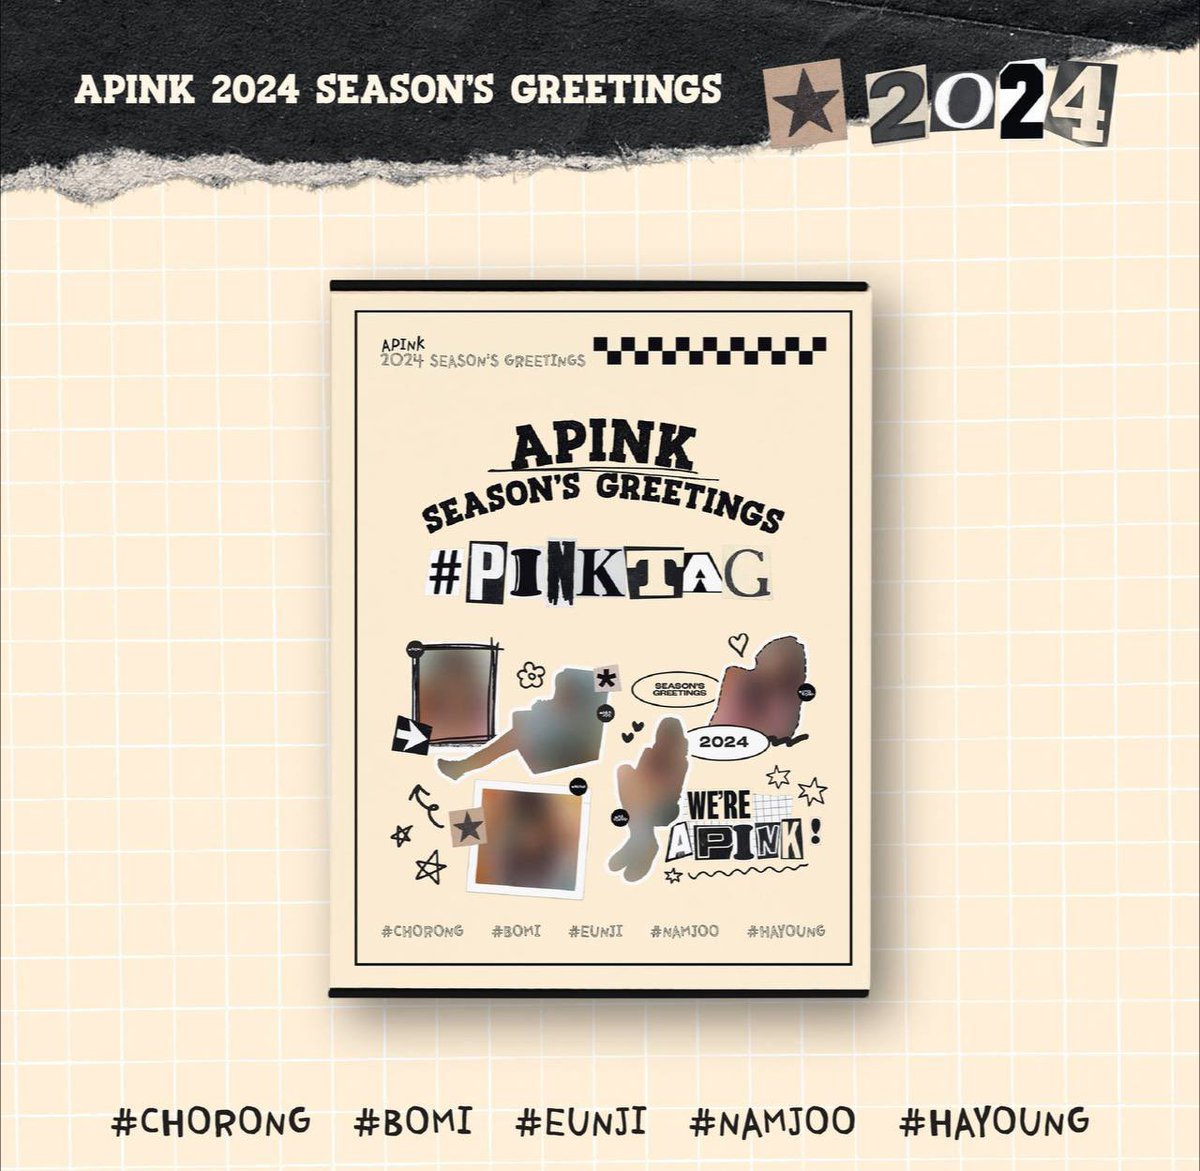 APINK 2024 Season Greetings [Pinktag] #official #pasarapink

Get it on shopee:
shope.ee/B3AFIIfmH